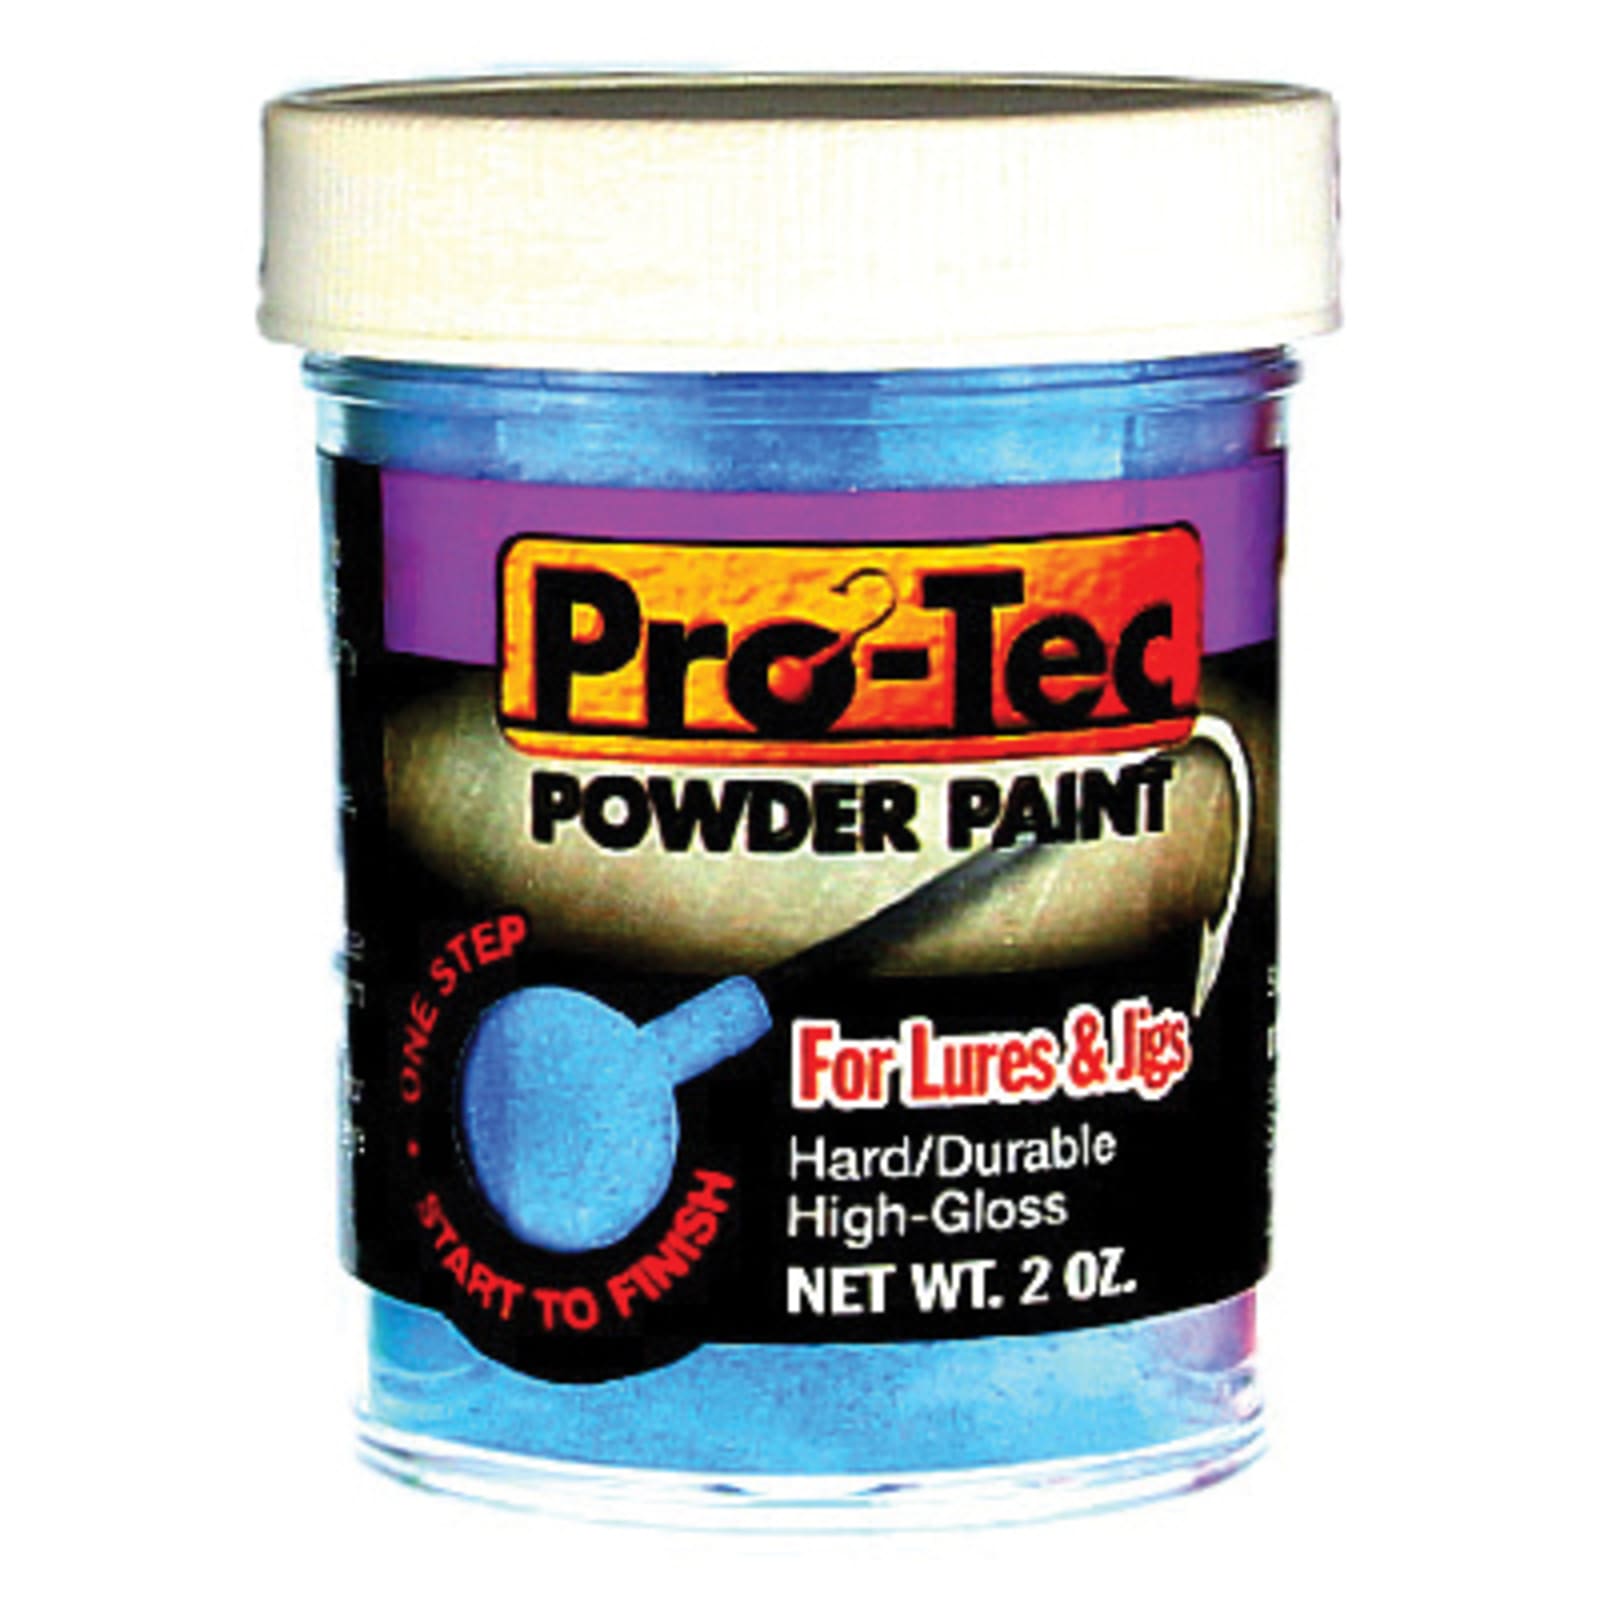 Pro-Tec Powder Paint 